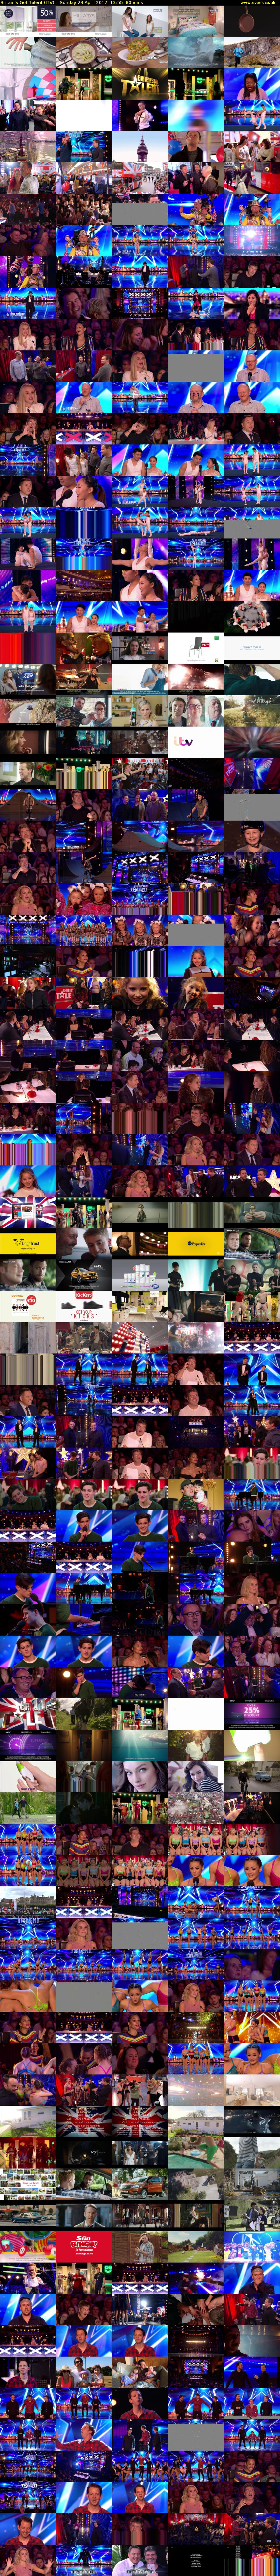 Britain's Got Talent (ITV) Sunday 23 April 2017 13:55 - 15:15